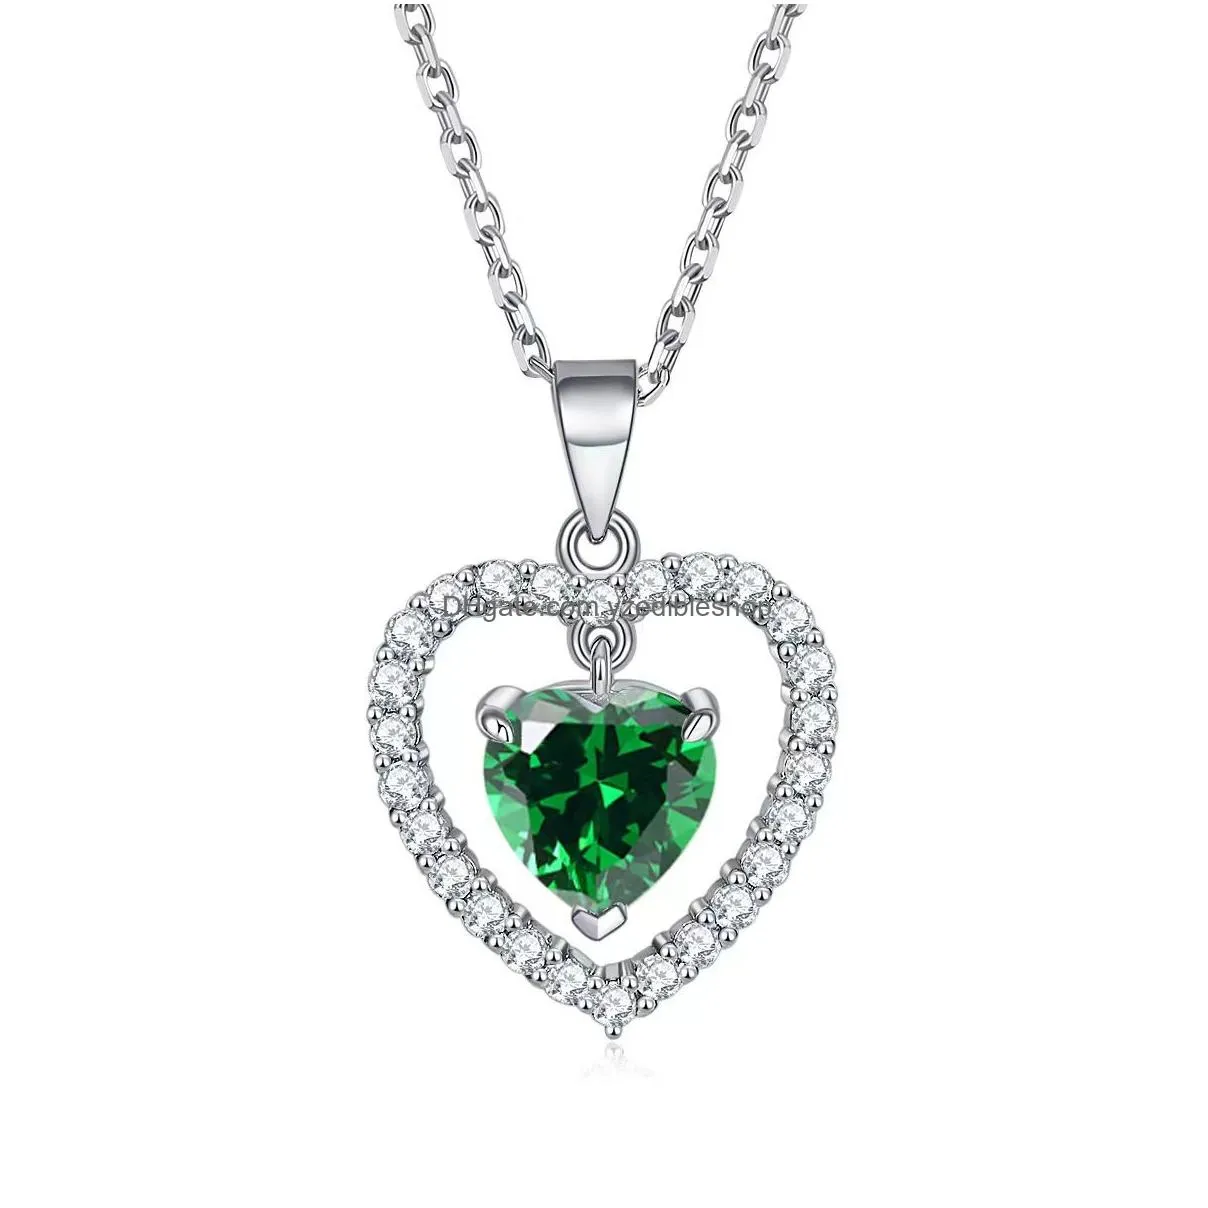  s925 sterling silver necklace heart zirconia color treasure pendant twelve birthday gift necklace